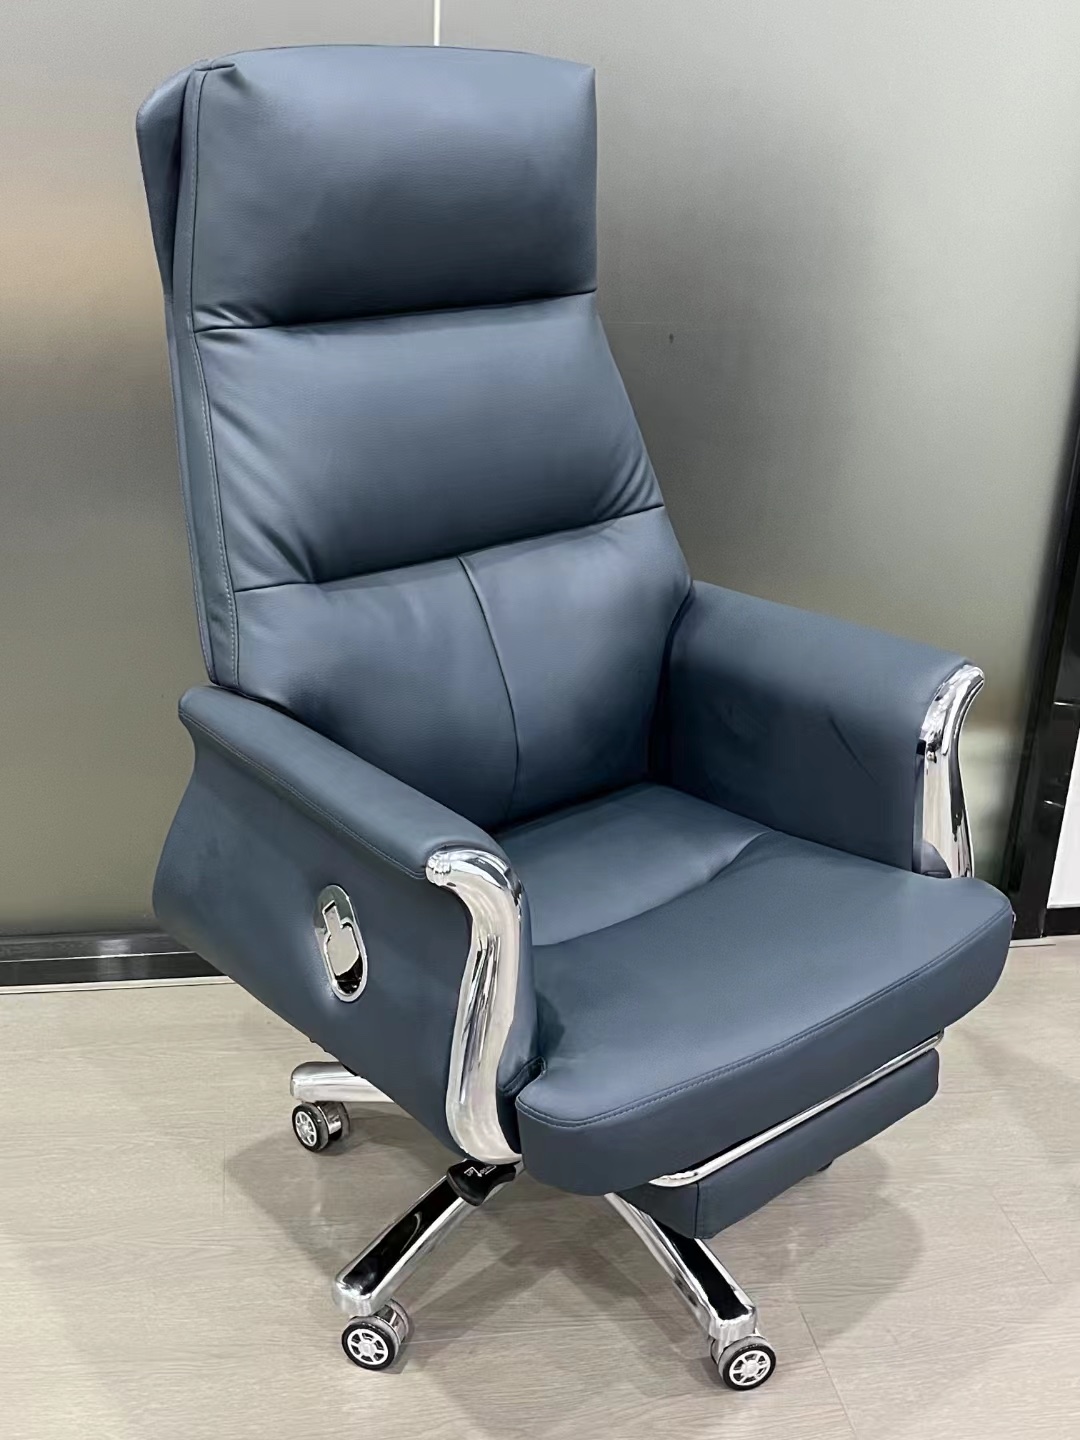 Office chair-3 办公椅 轮滑设计 舒适坐感 可调节高度 适合长时间工作学习